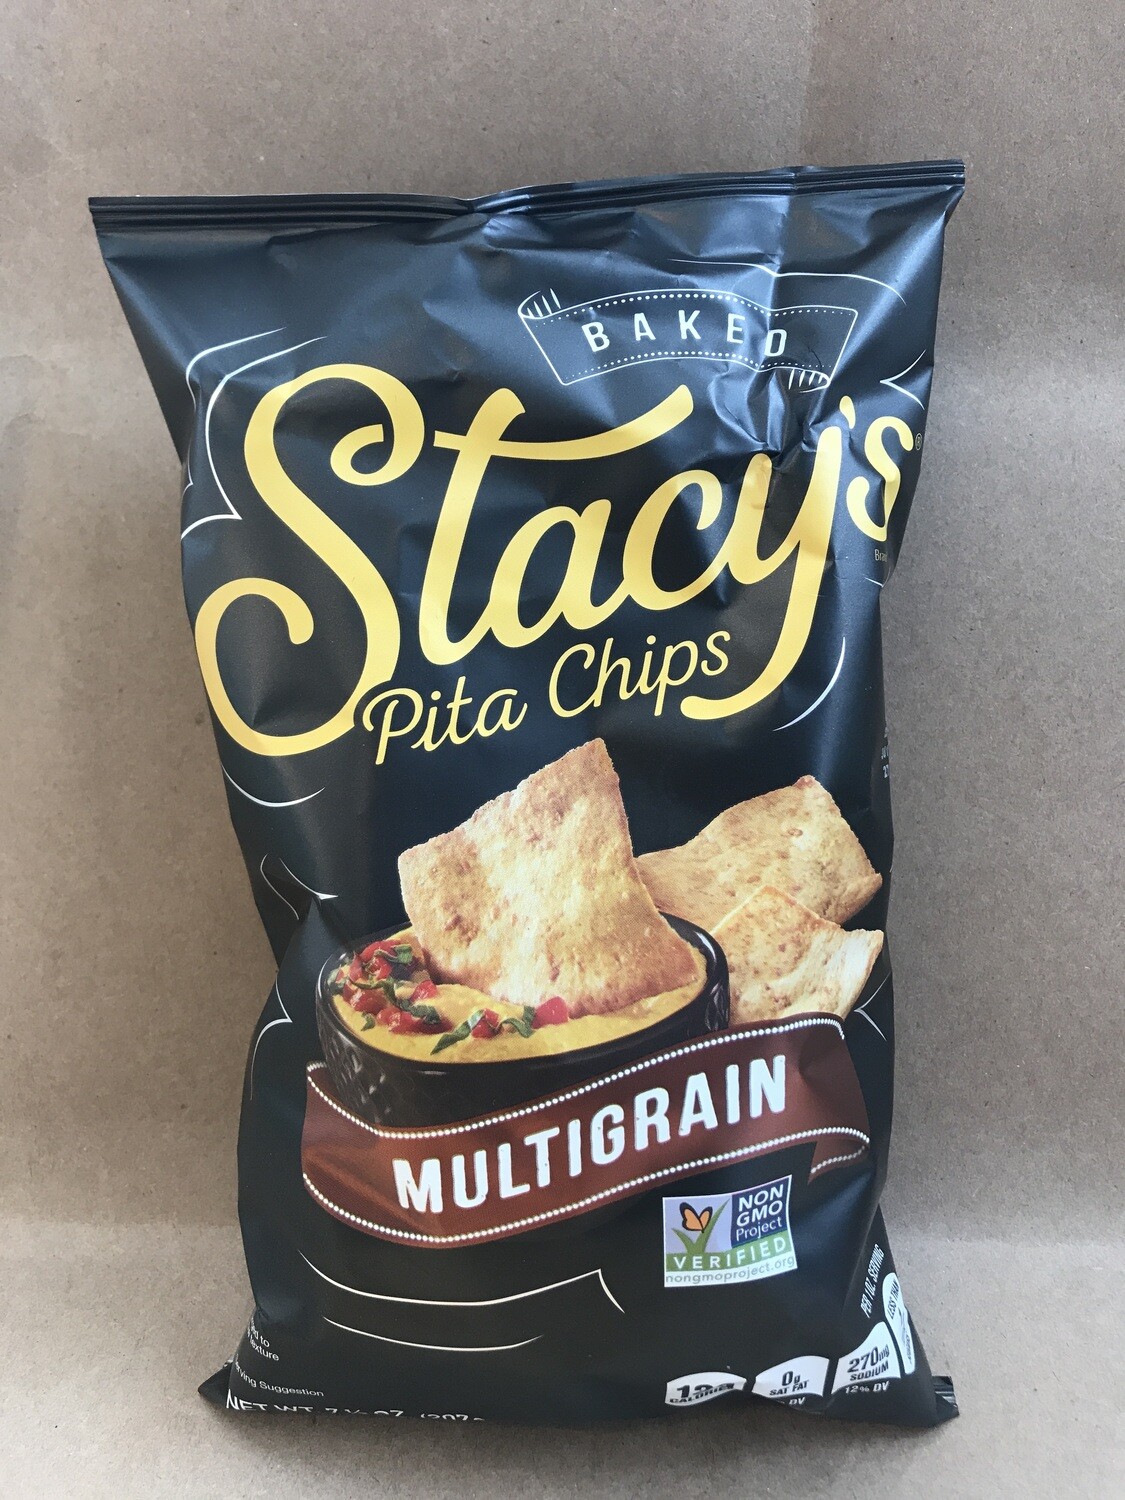 Chips / Crisps / Stacy's Multigrain Pita Chips, 7 oz